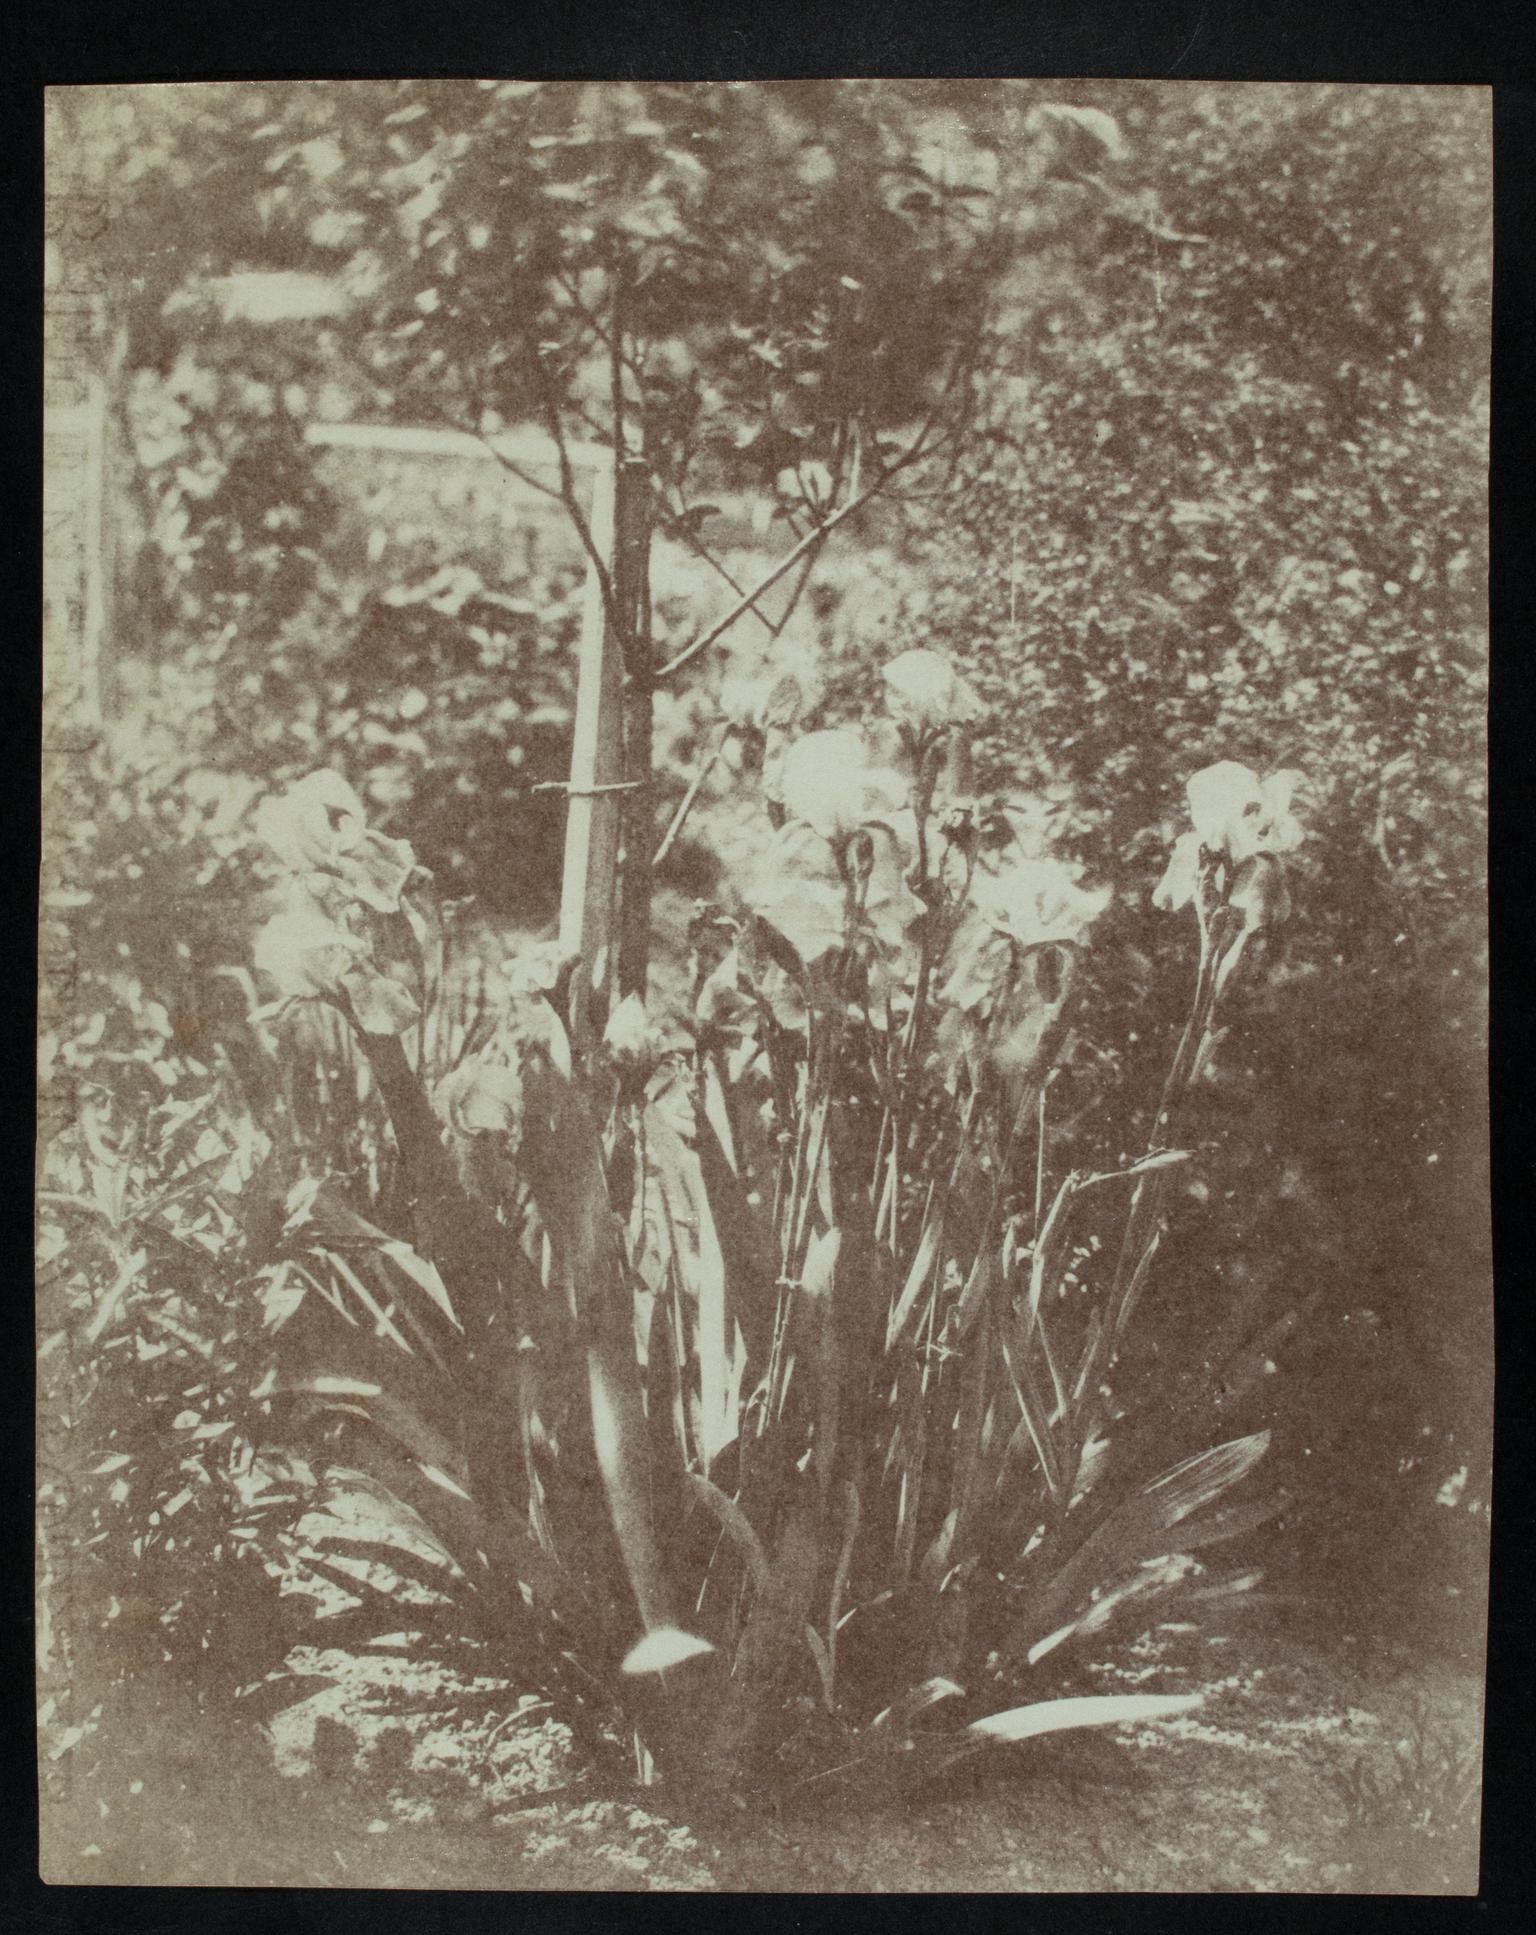 Irises, photograph